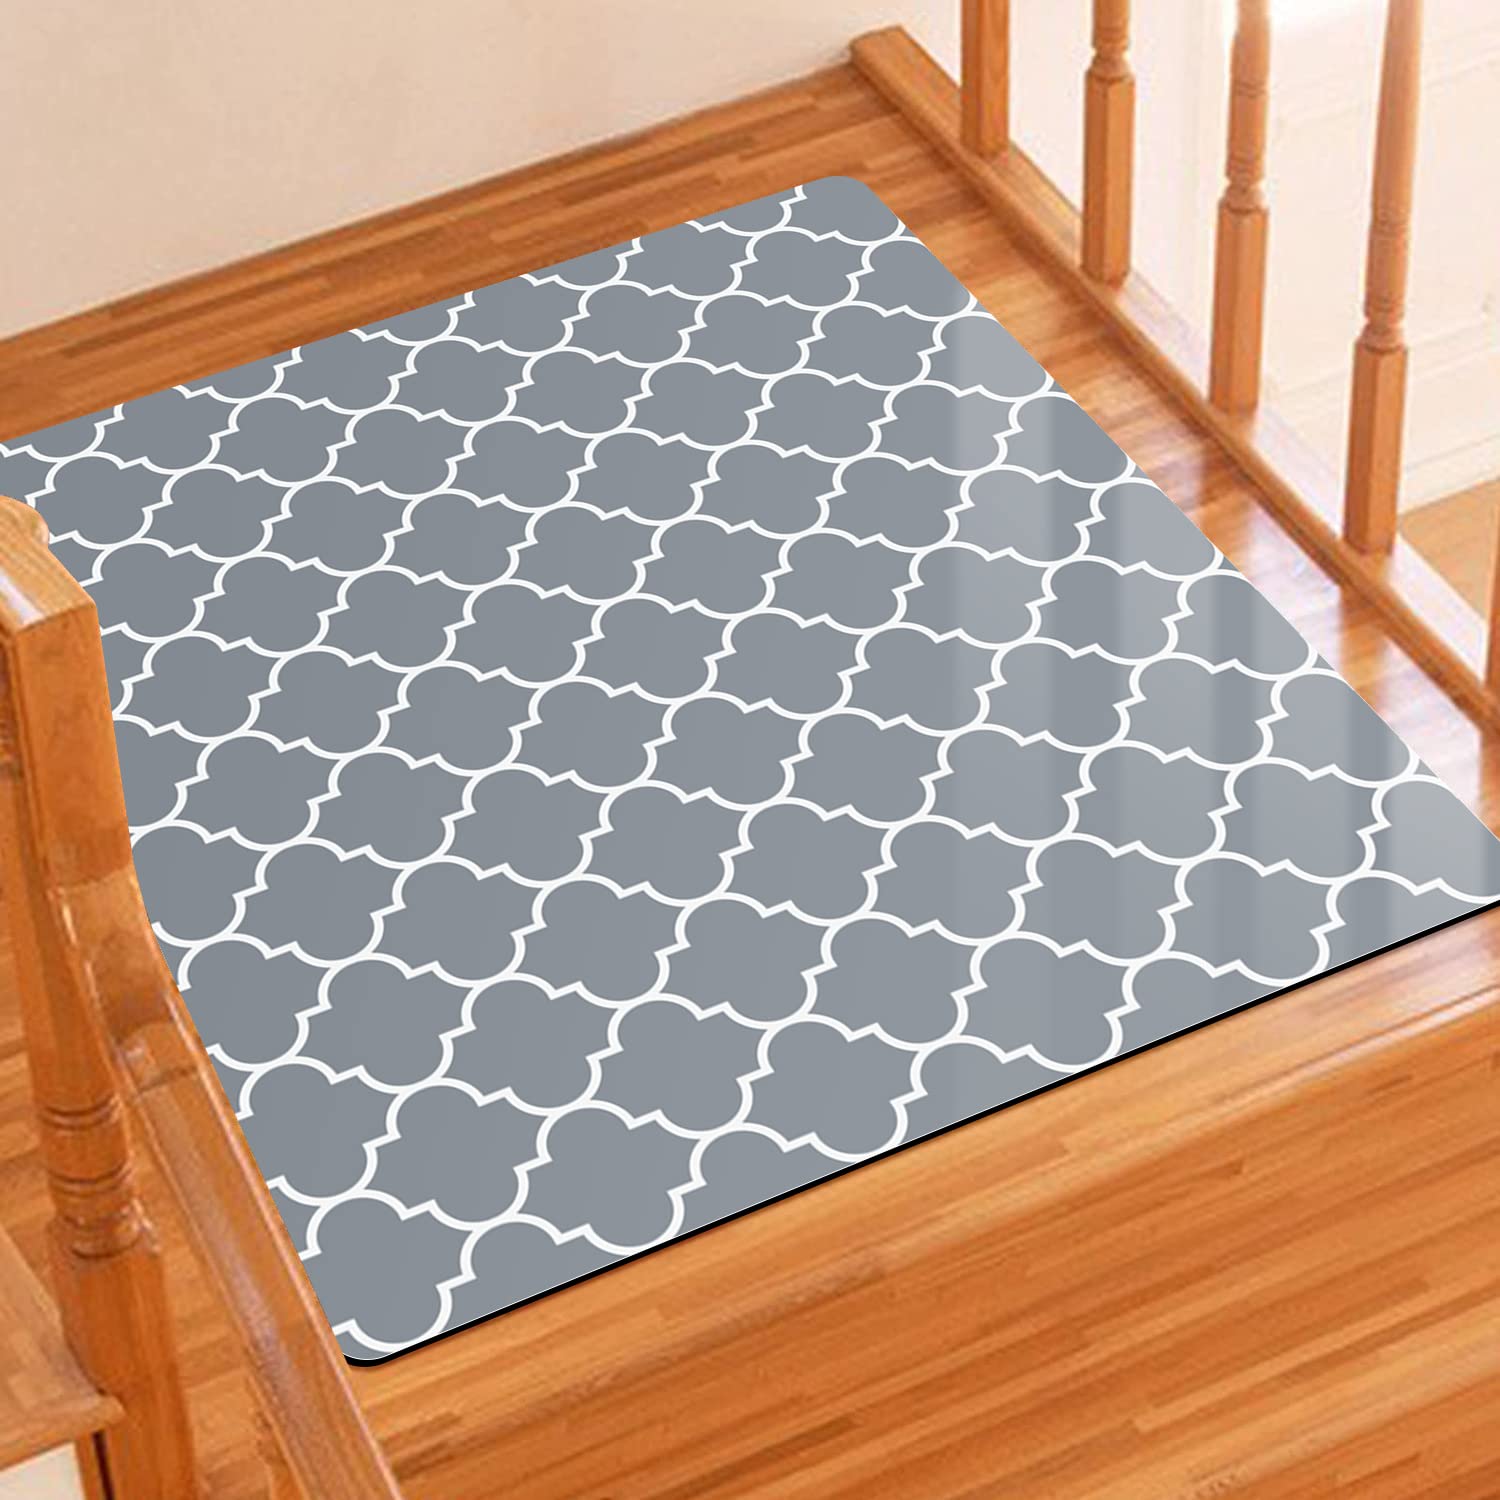 Stair Treads Carpet with Landing Slip Resistant, Gray [...]